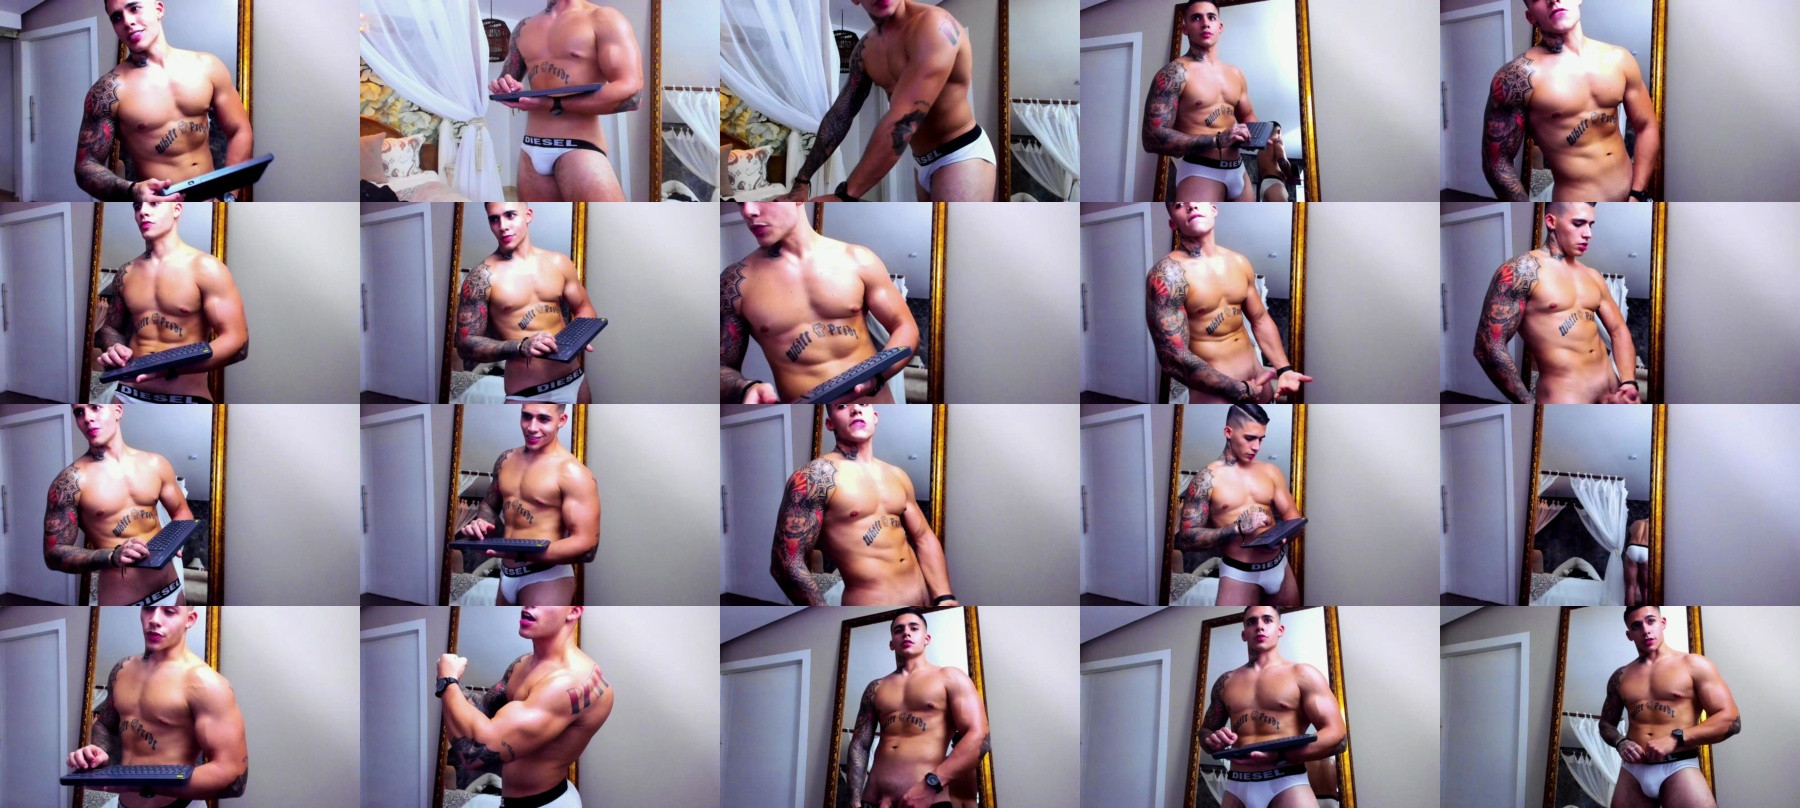 Dominic_Sullivan1  05-03-2021 Male Topless